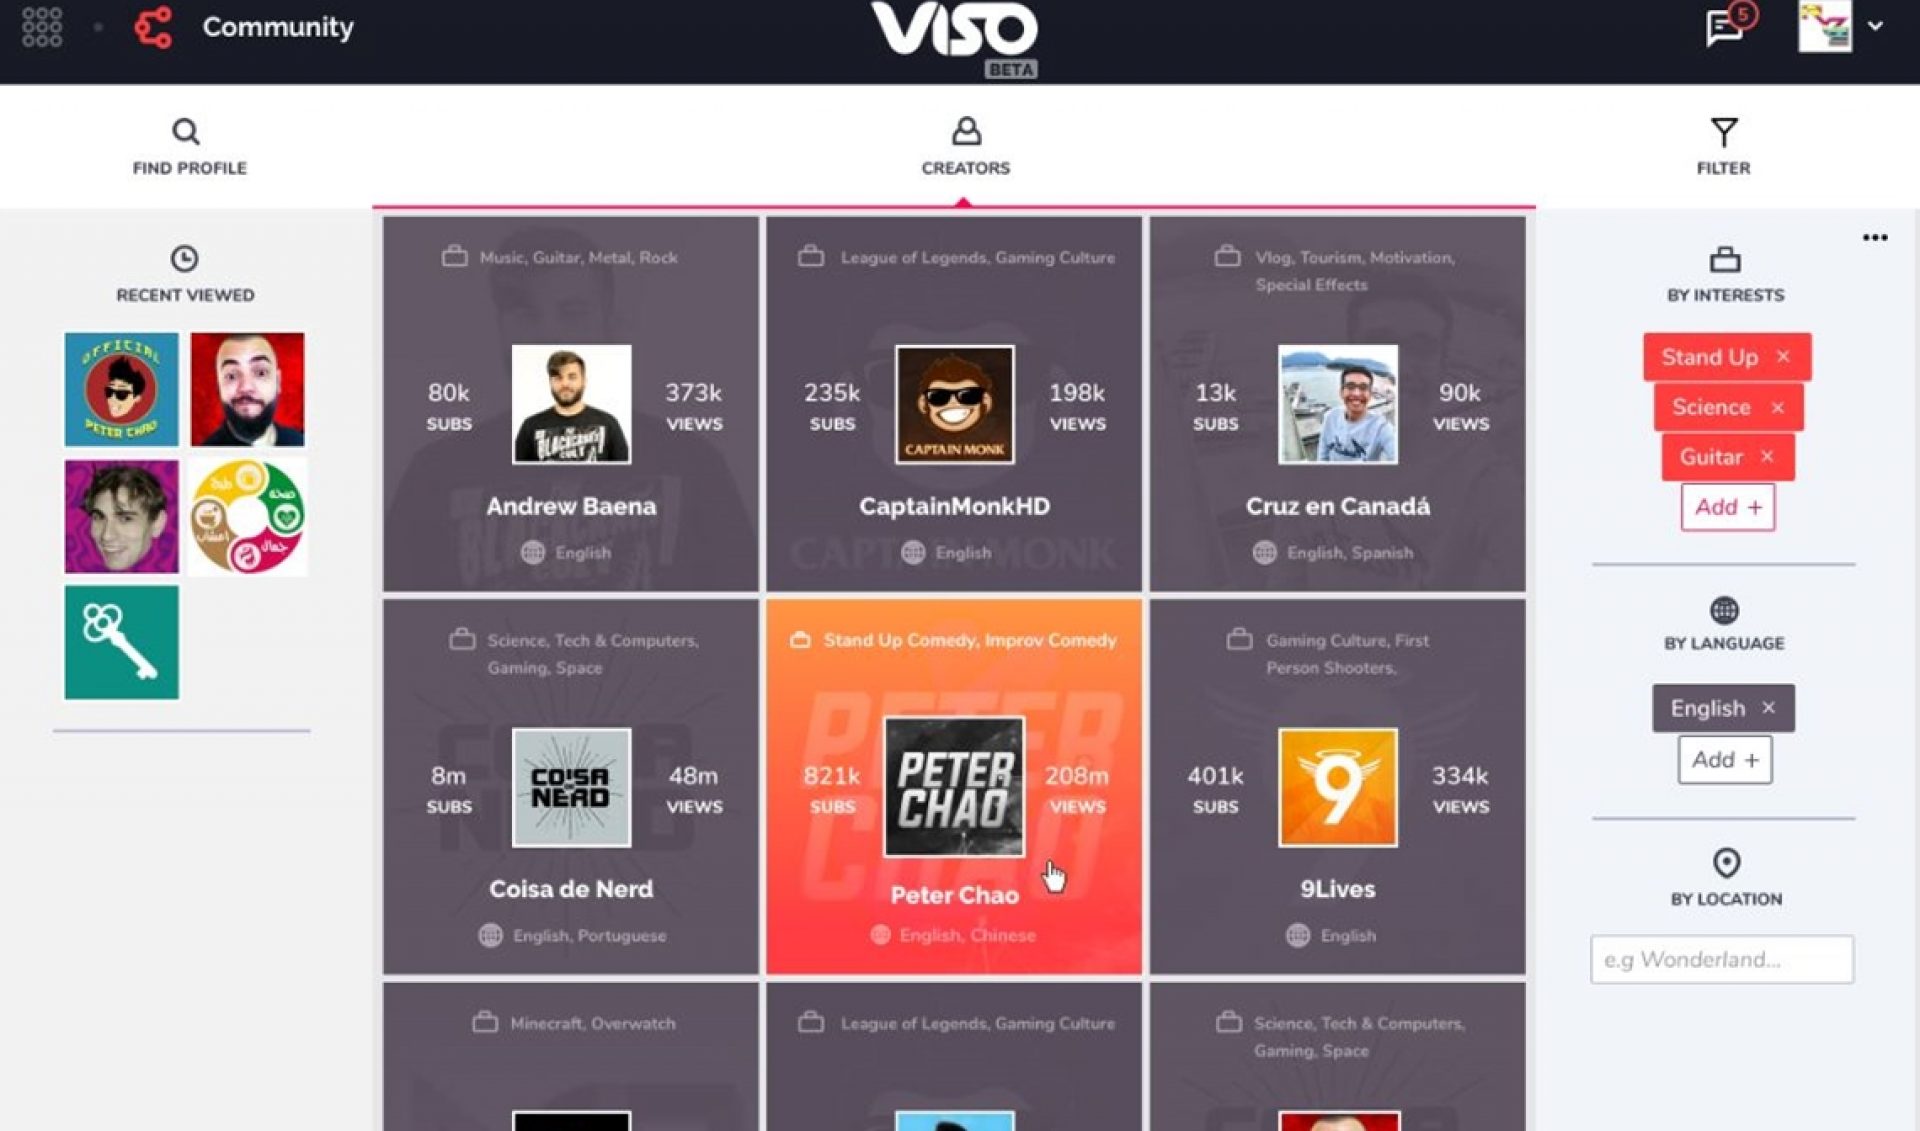 BroadbandTV Unveils ‘VISO’ Platform To Help Creators Collaborate, Optimize Uploads, More